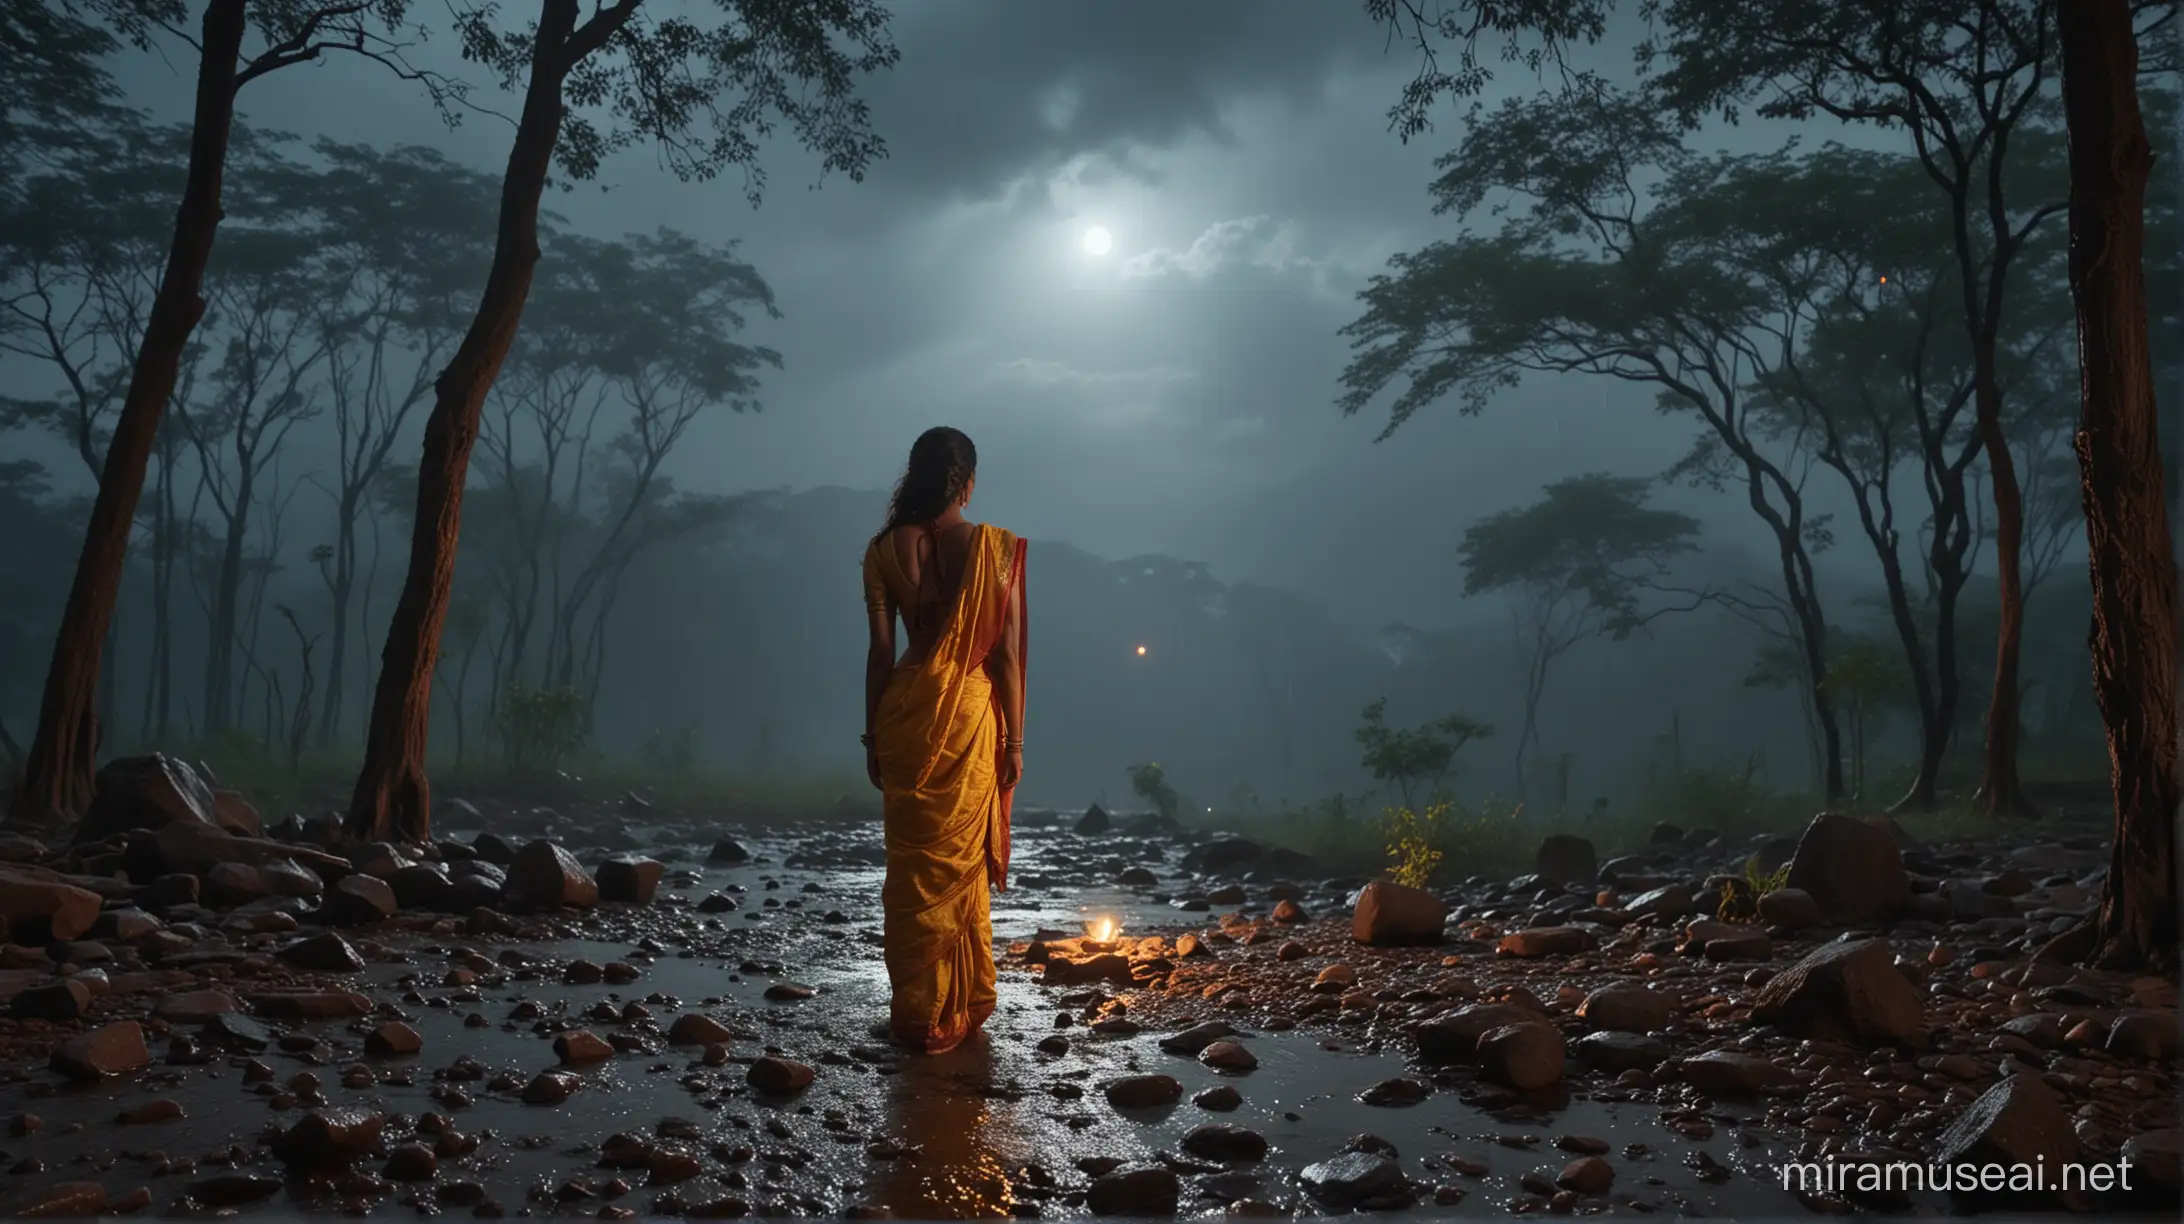 Dramatic Night Worship Scene Mystical Stone Goddess in Stormy Forest